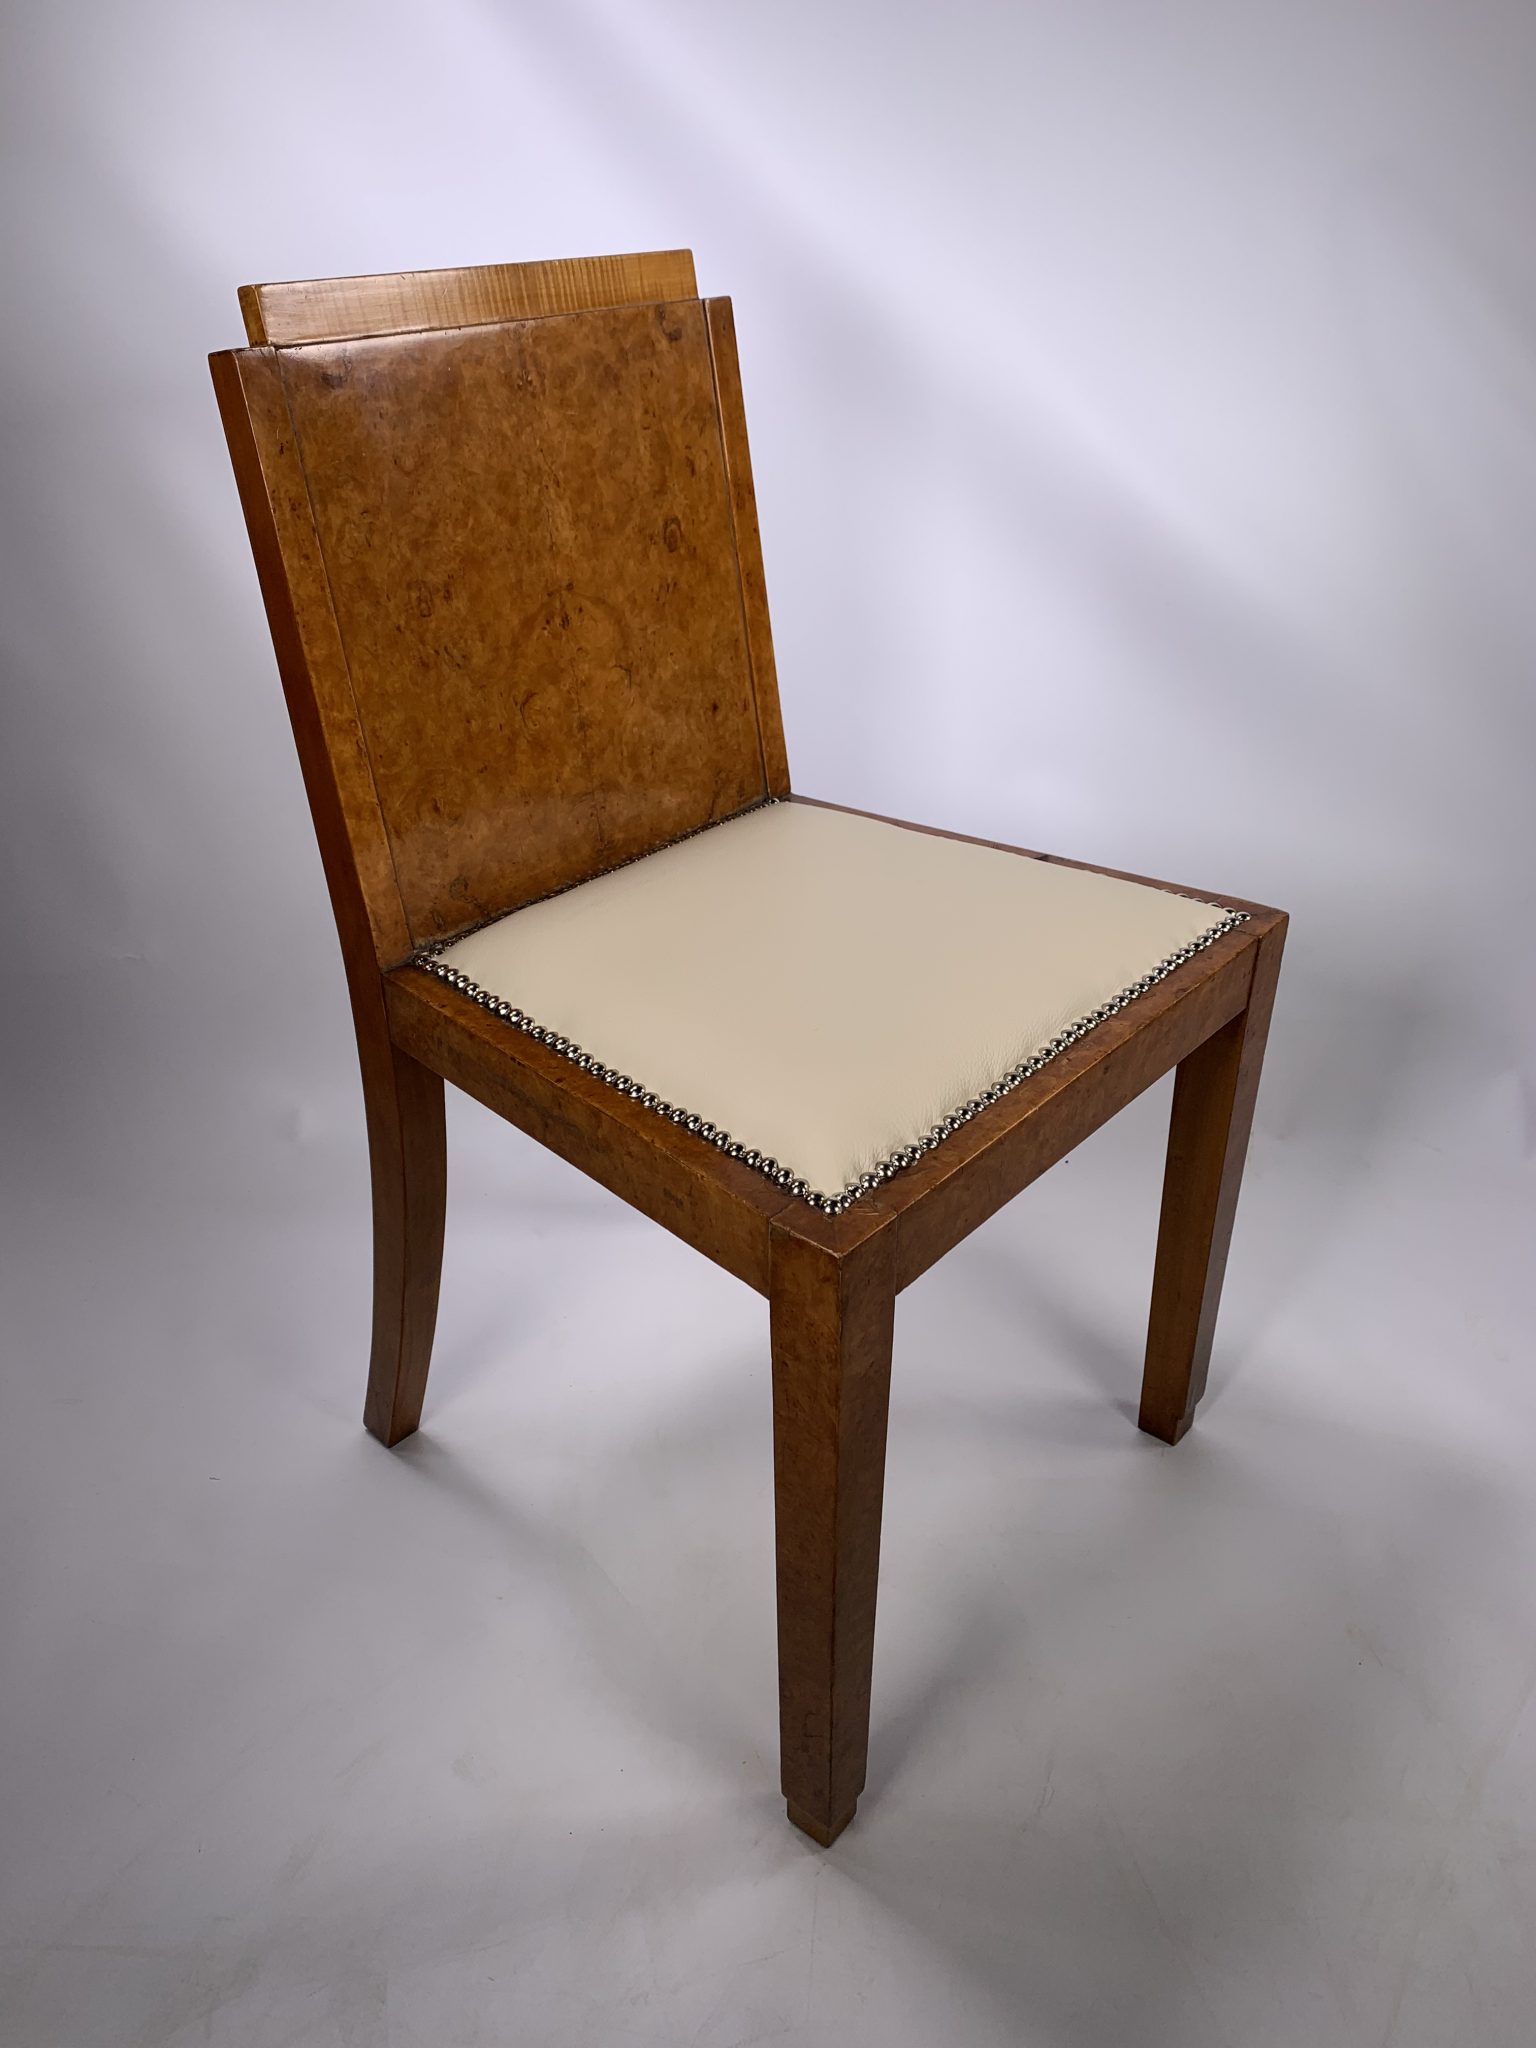 A Fine Art Deco Bedroom Chair Poirot Art Deco Furnishings